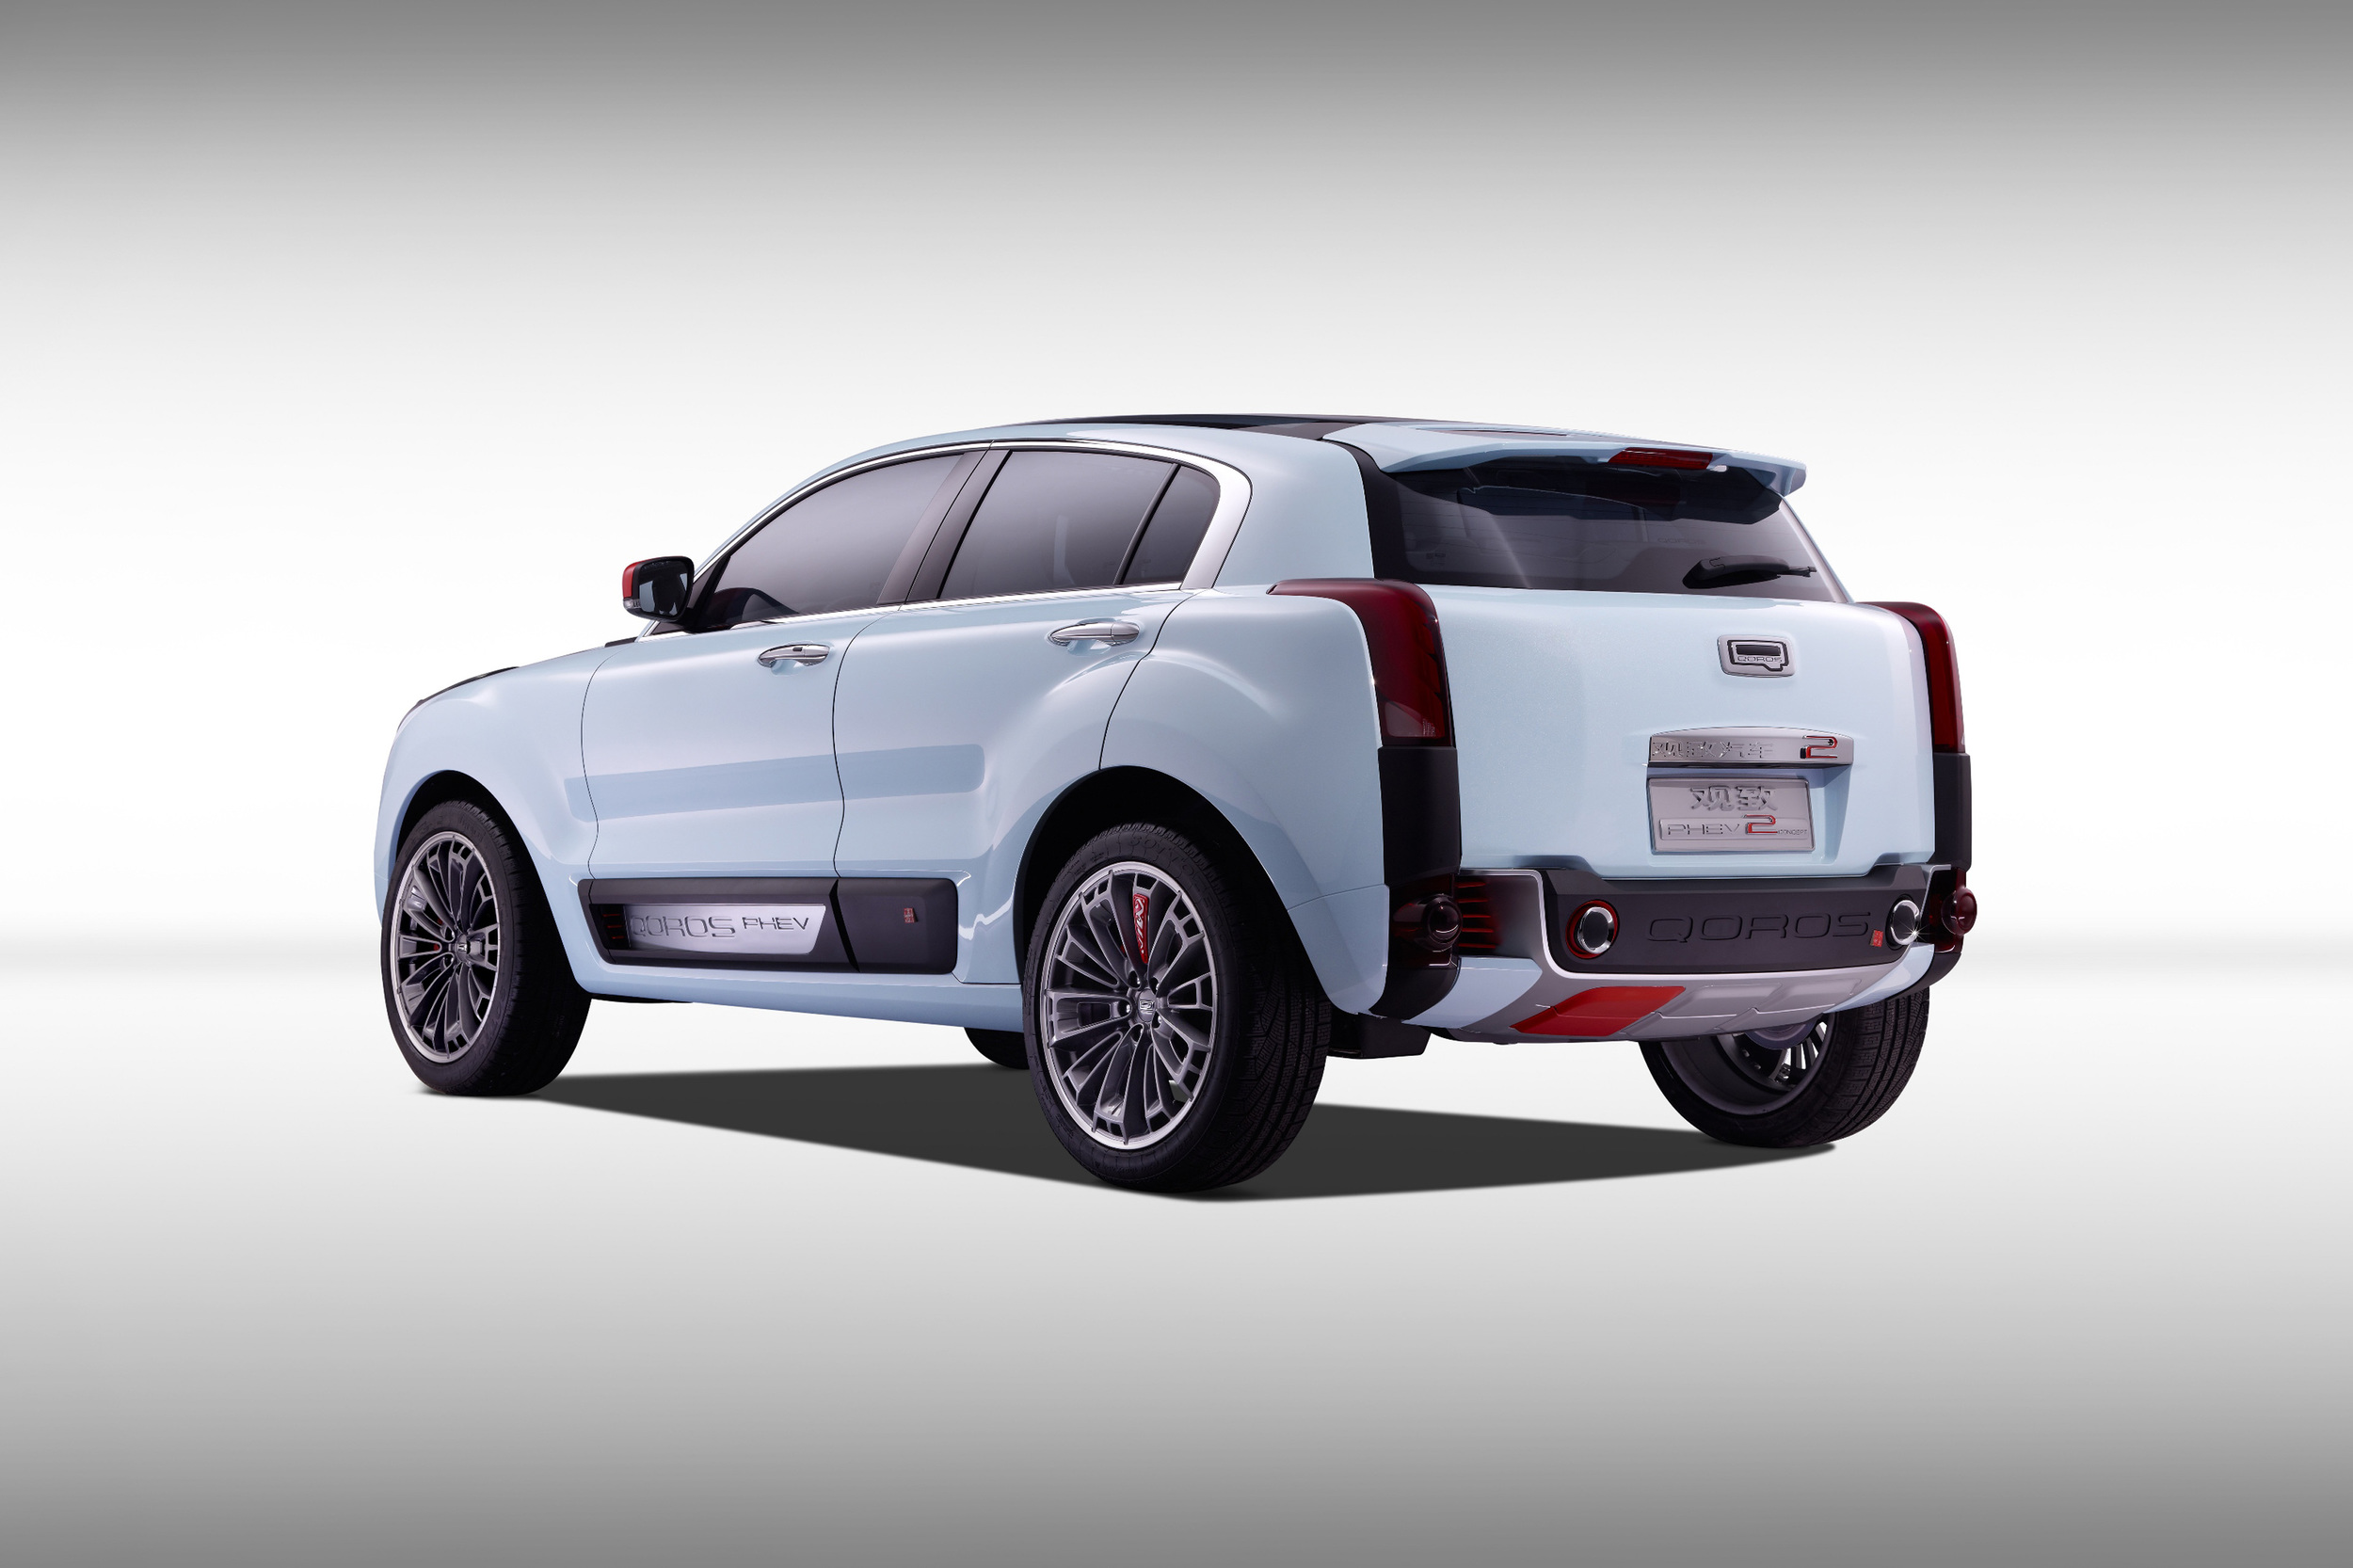 Qoros 2 SUV PHEV Concept, 2015